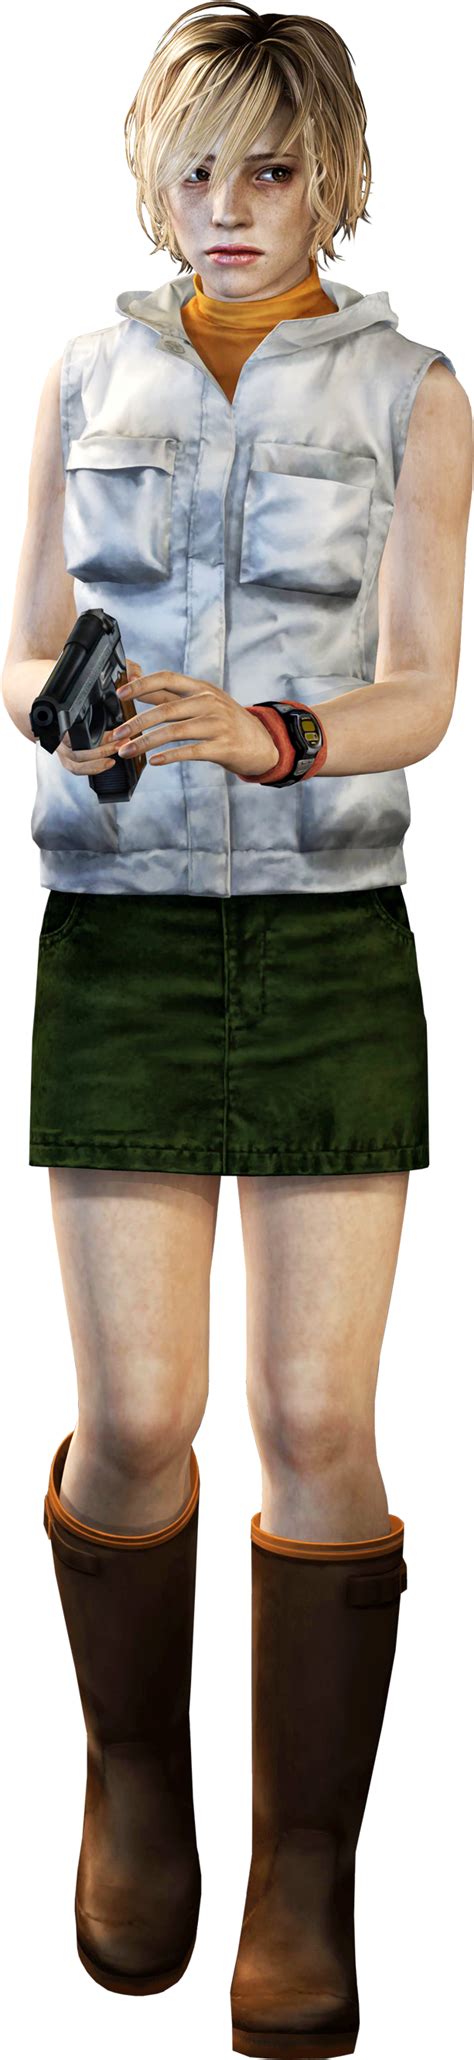 Heather Mason - Silent Hill - Image #2792944 - Zerochan Anime Image Board